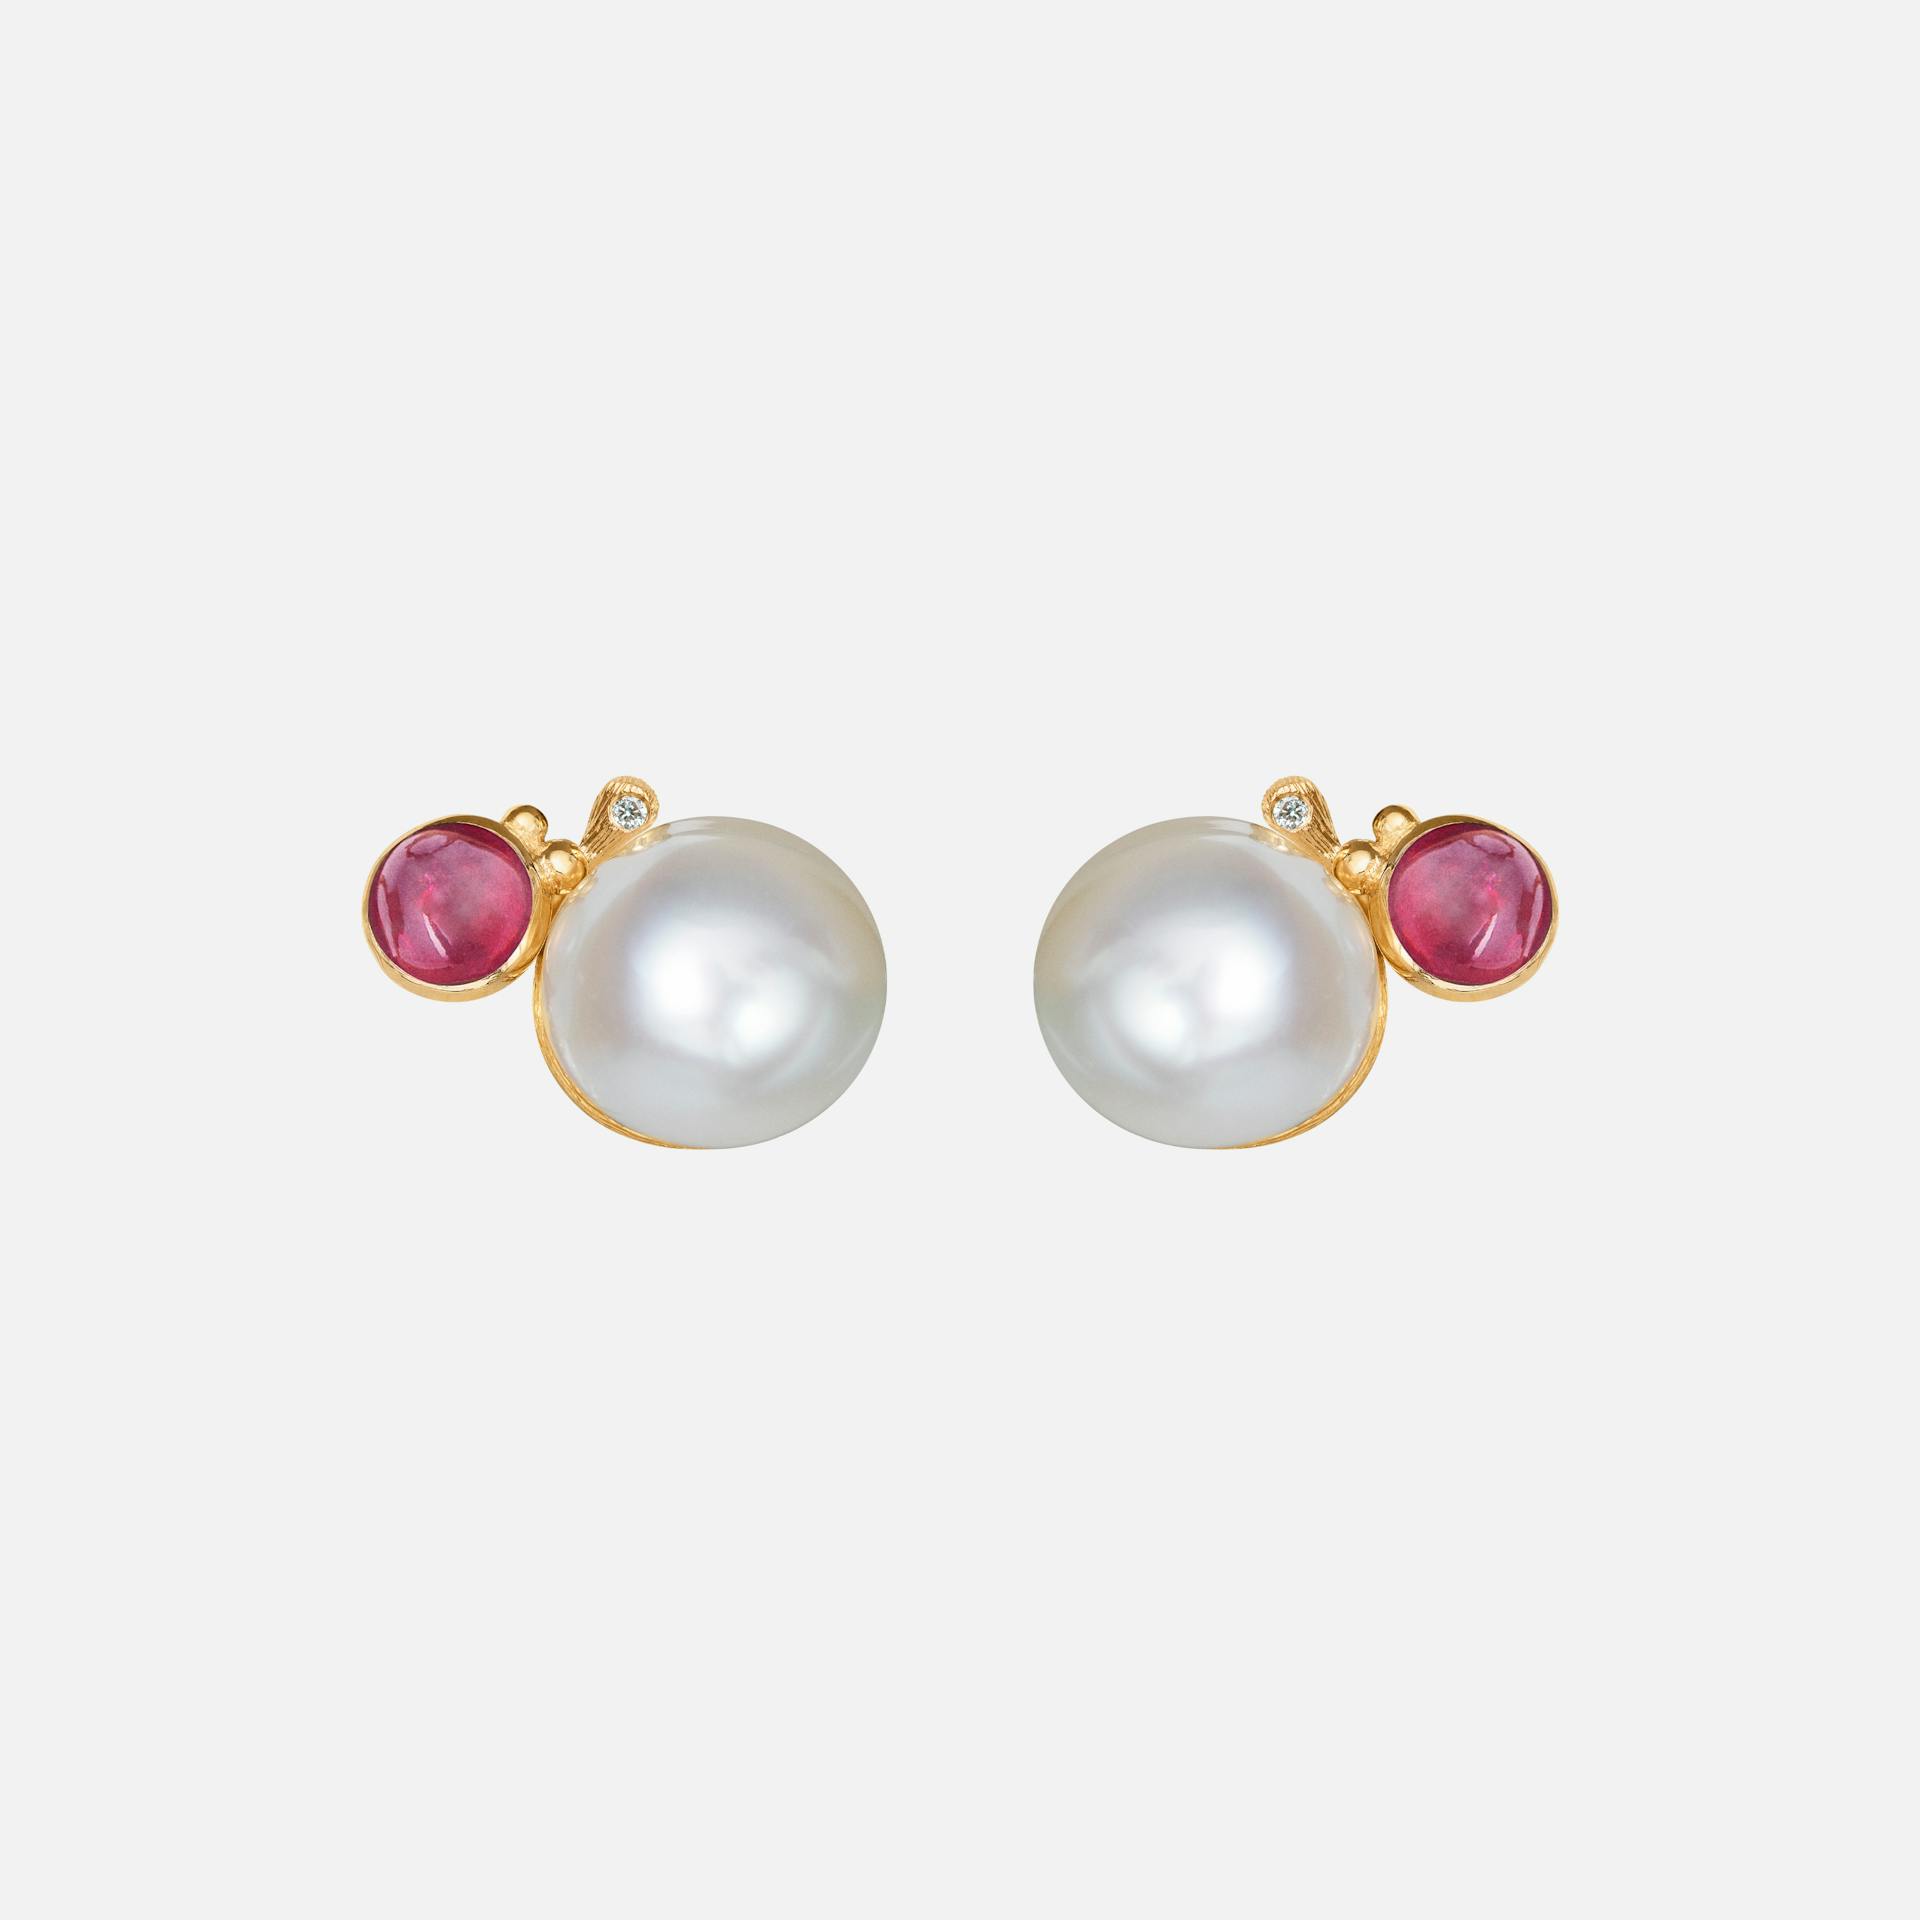 BoHo stud earrings large 18k gold with freshwater pearls, cerise tourmaline and diamonds